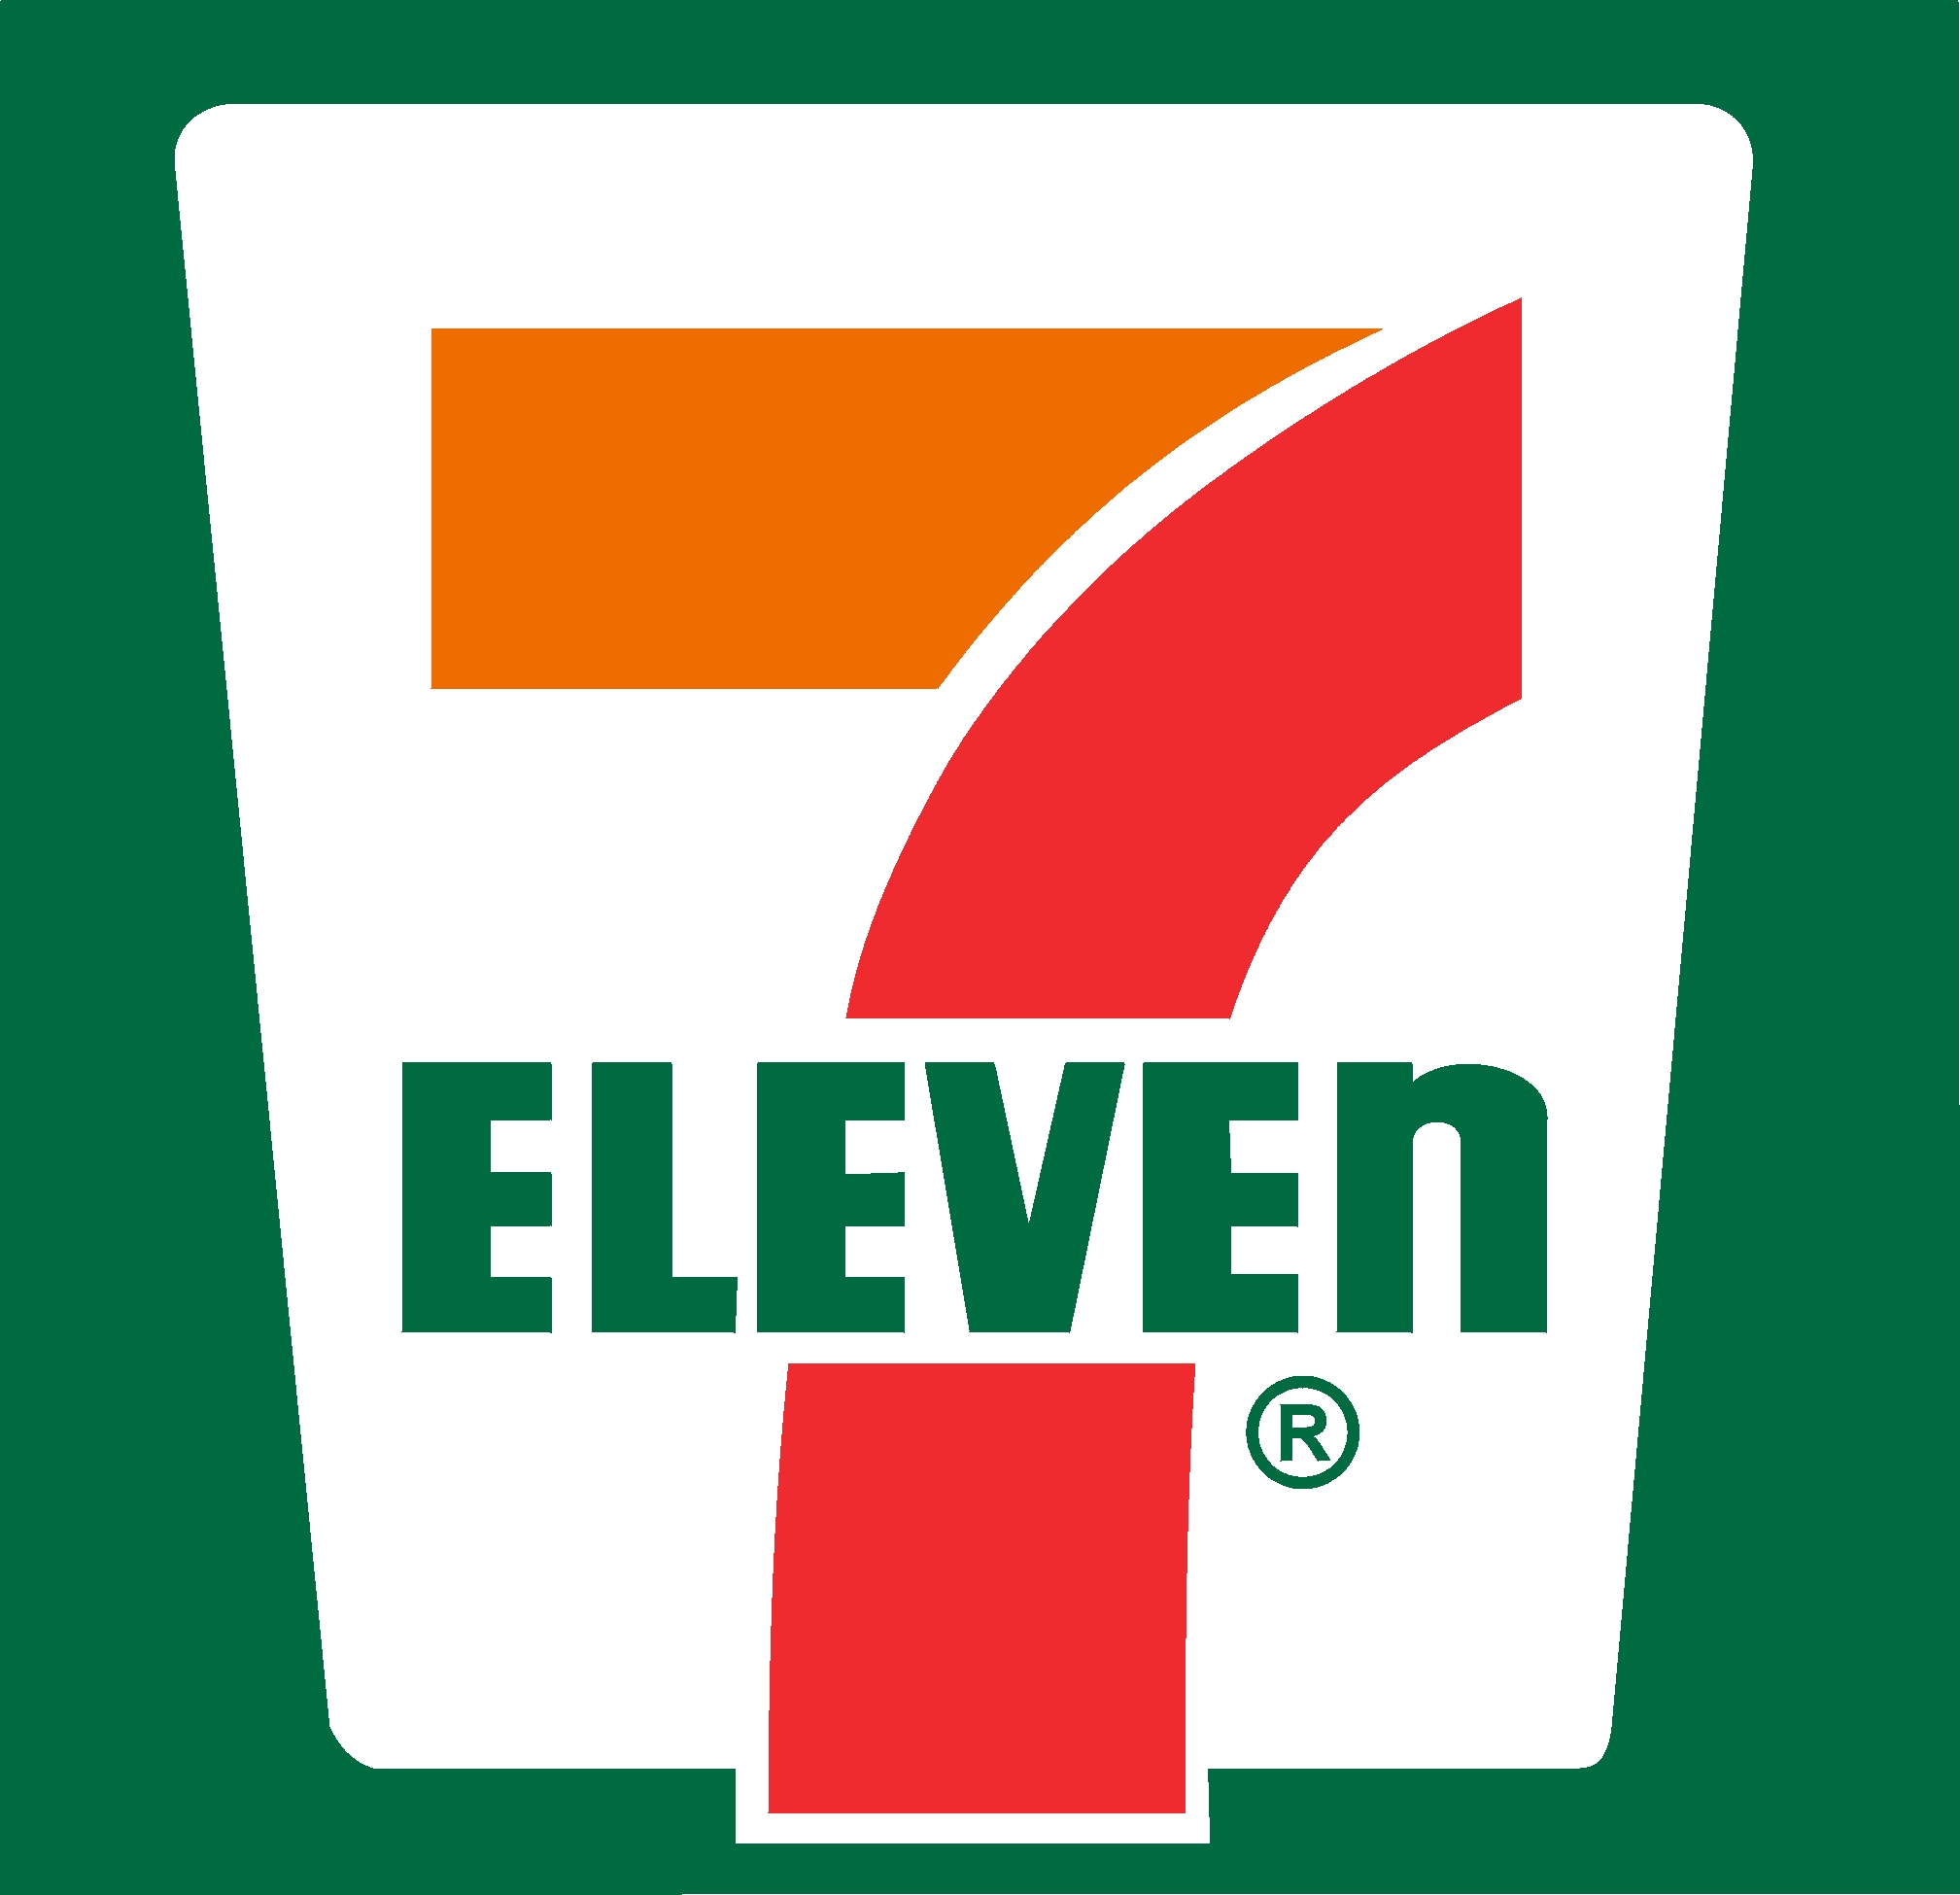 7 ELEVEN Logo photo - 1